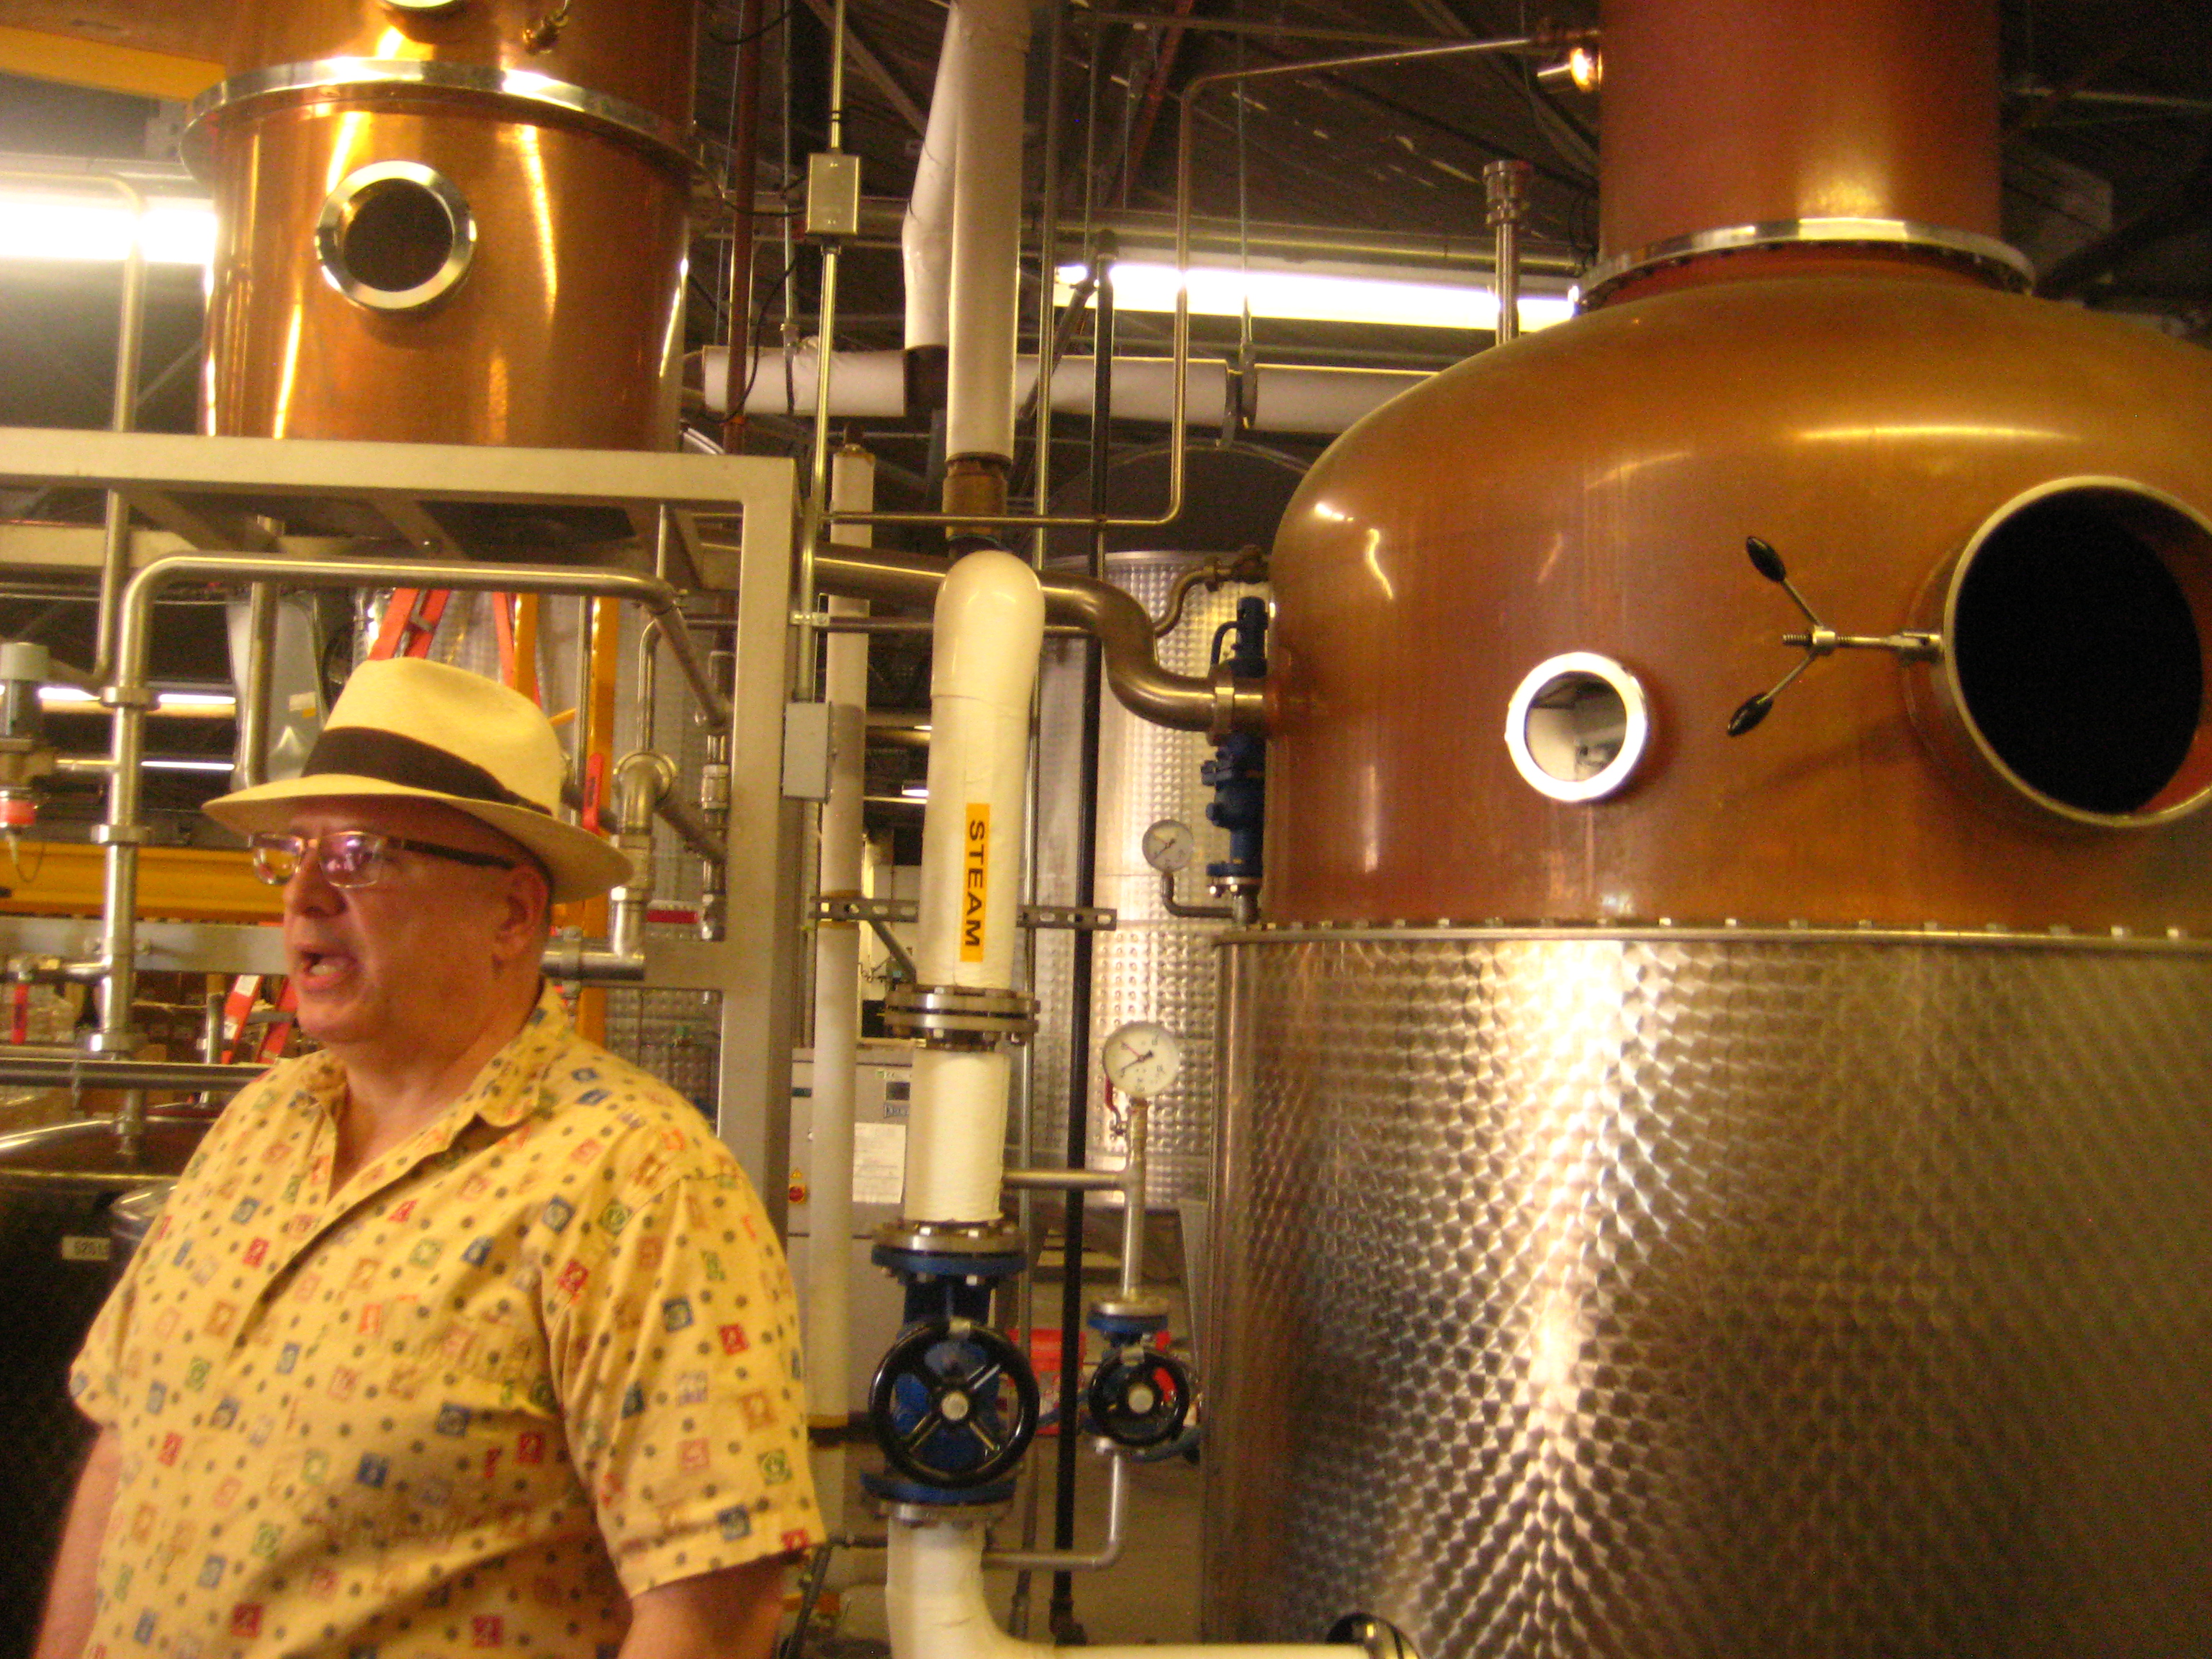 Go Visit a Local Distillery!